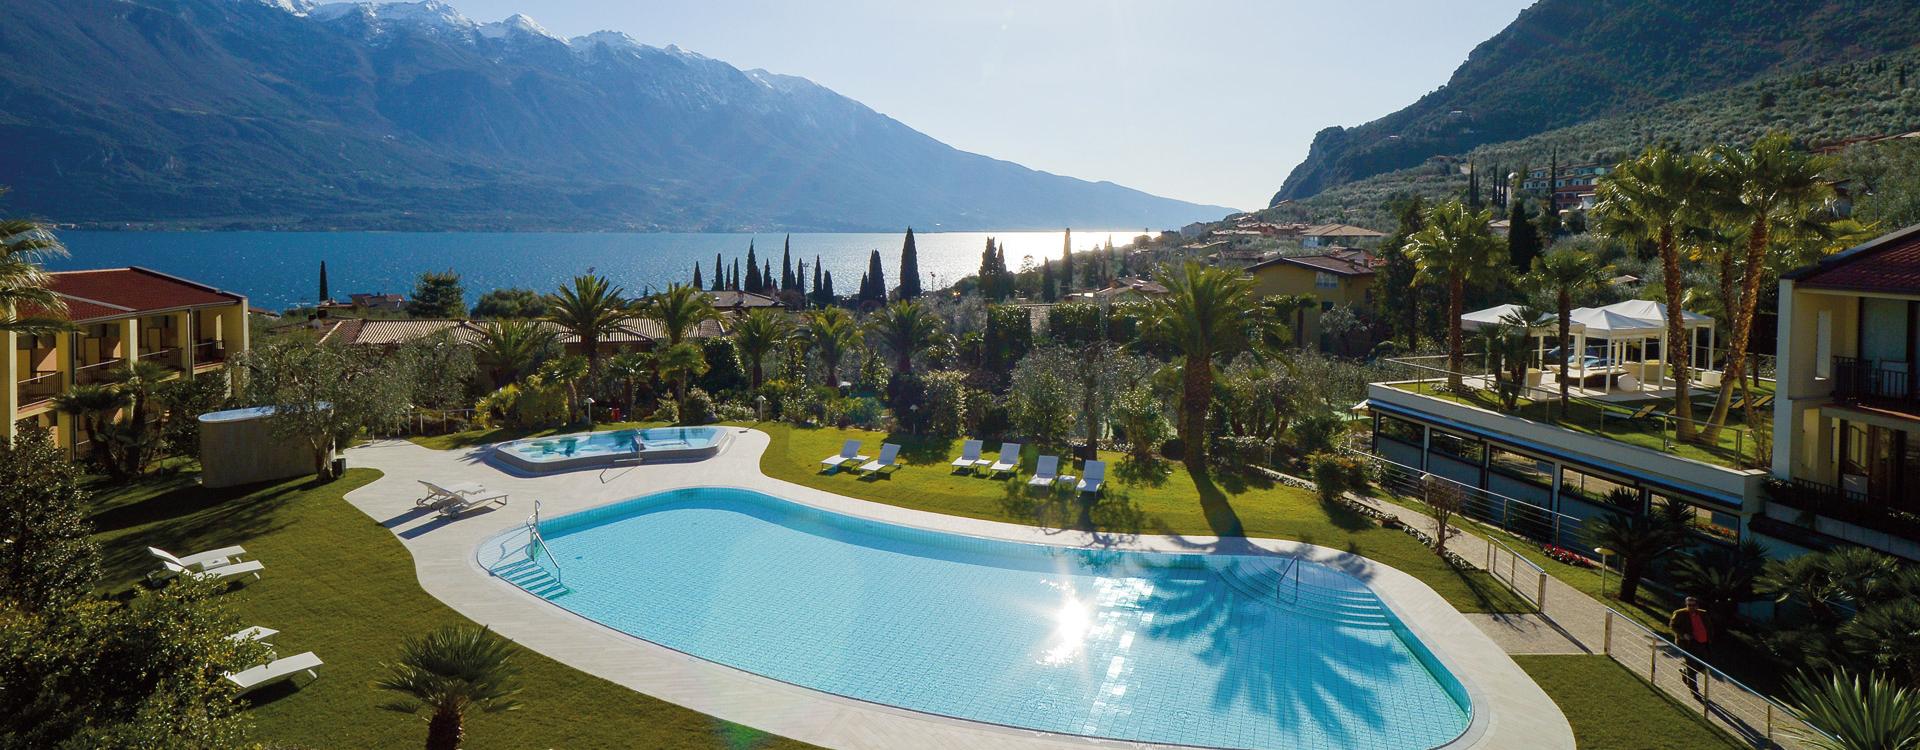 Pool & Spa Park Hotel Imperial, Limone sul Garda, Brescia, Italy